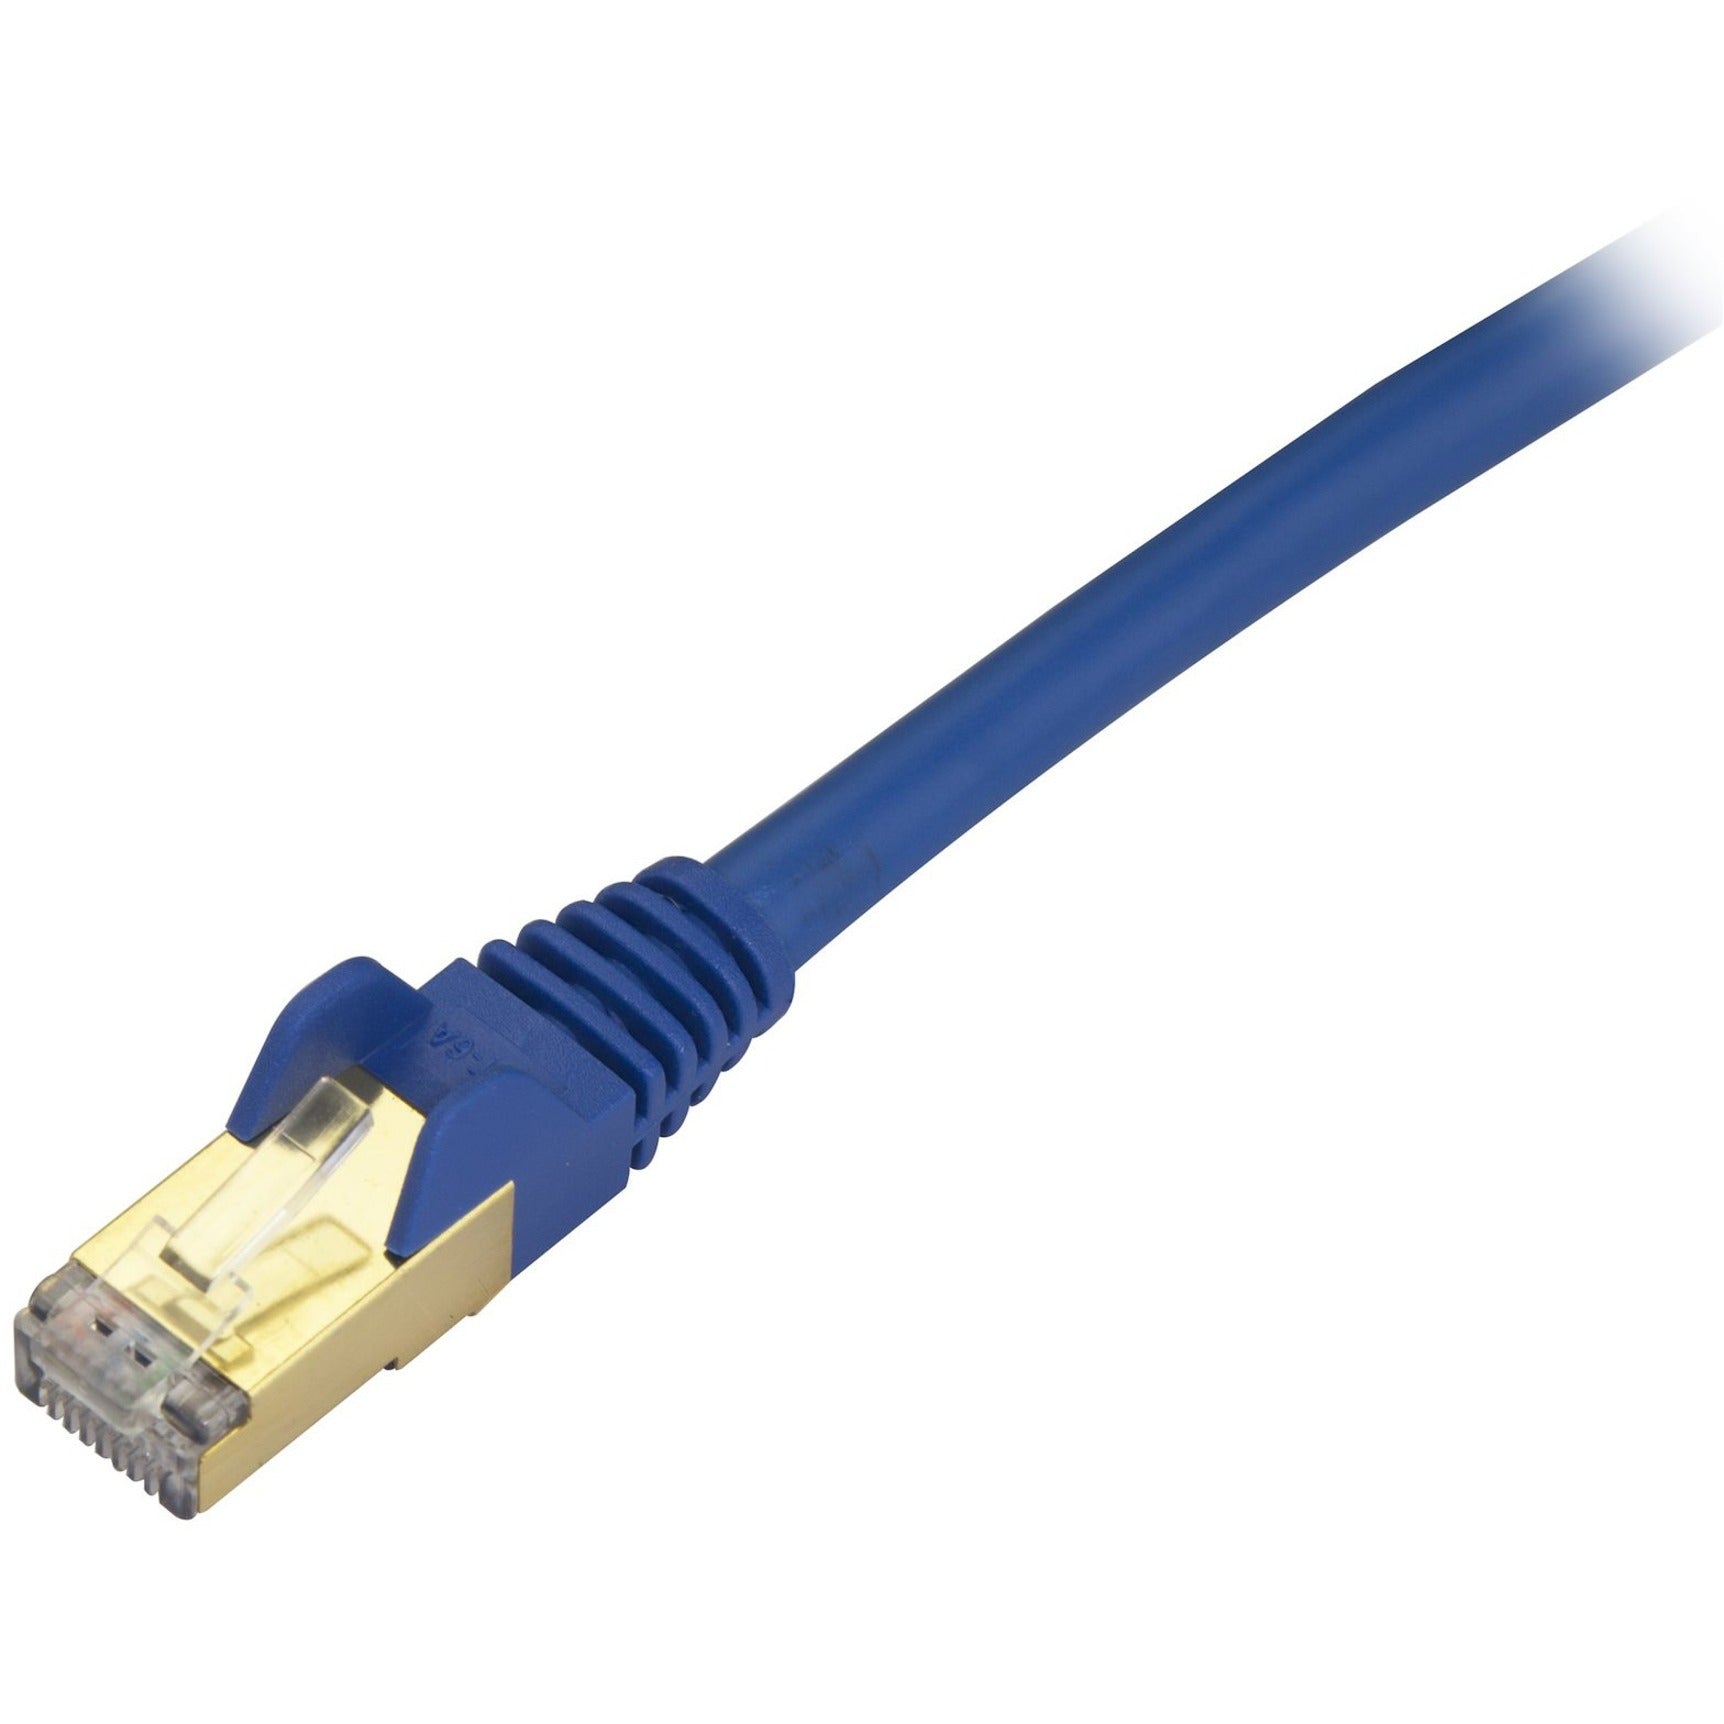 Marca: StarTech.com Cable de parche moldeado apantallado Cat6a azul de 10 pies RJ45 STP de 10 Gigabit protección EMI/RF.